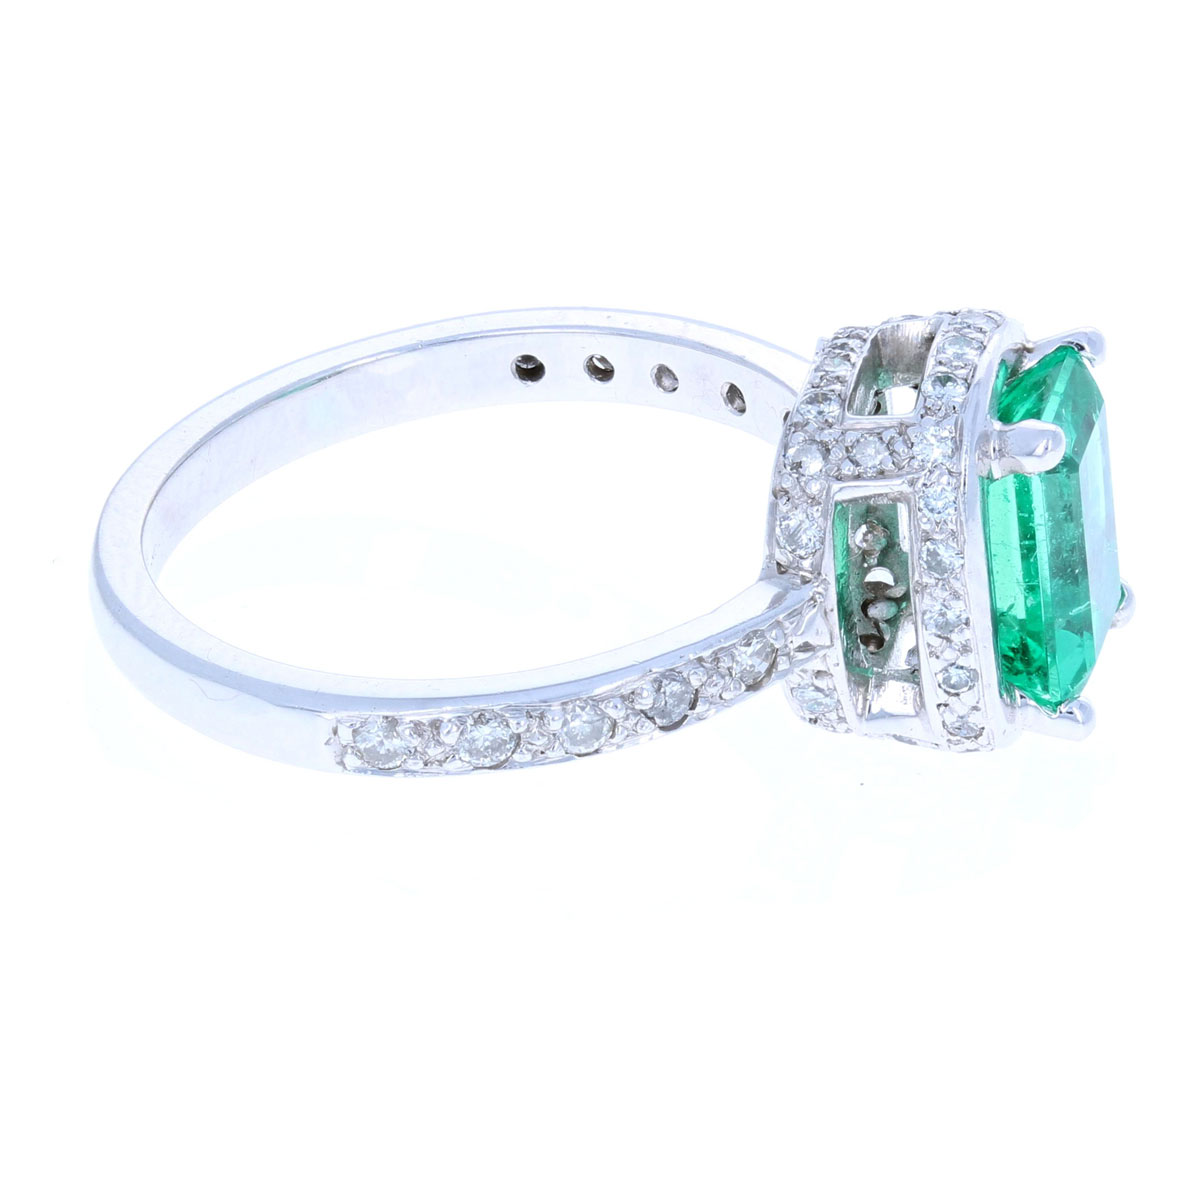 Emerald-Cut Emerald & Round Diamond Ring 14 KT